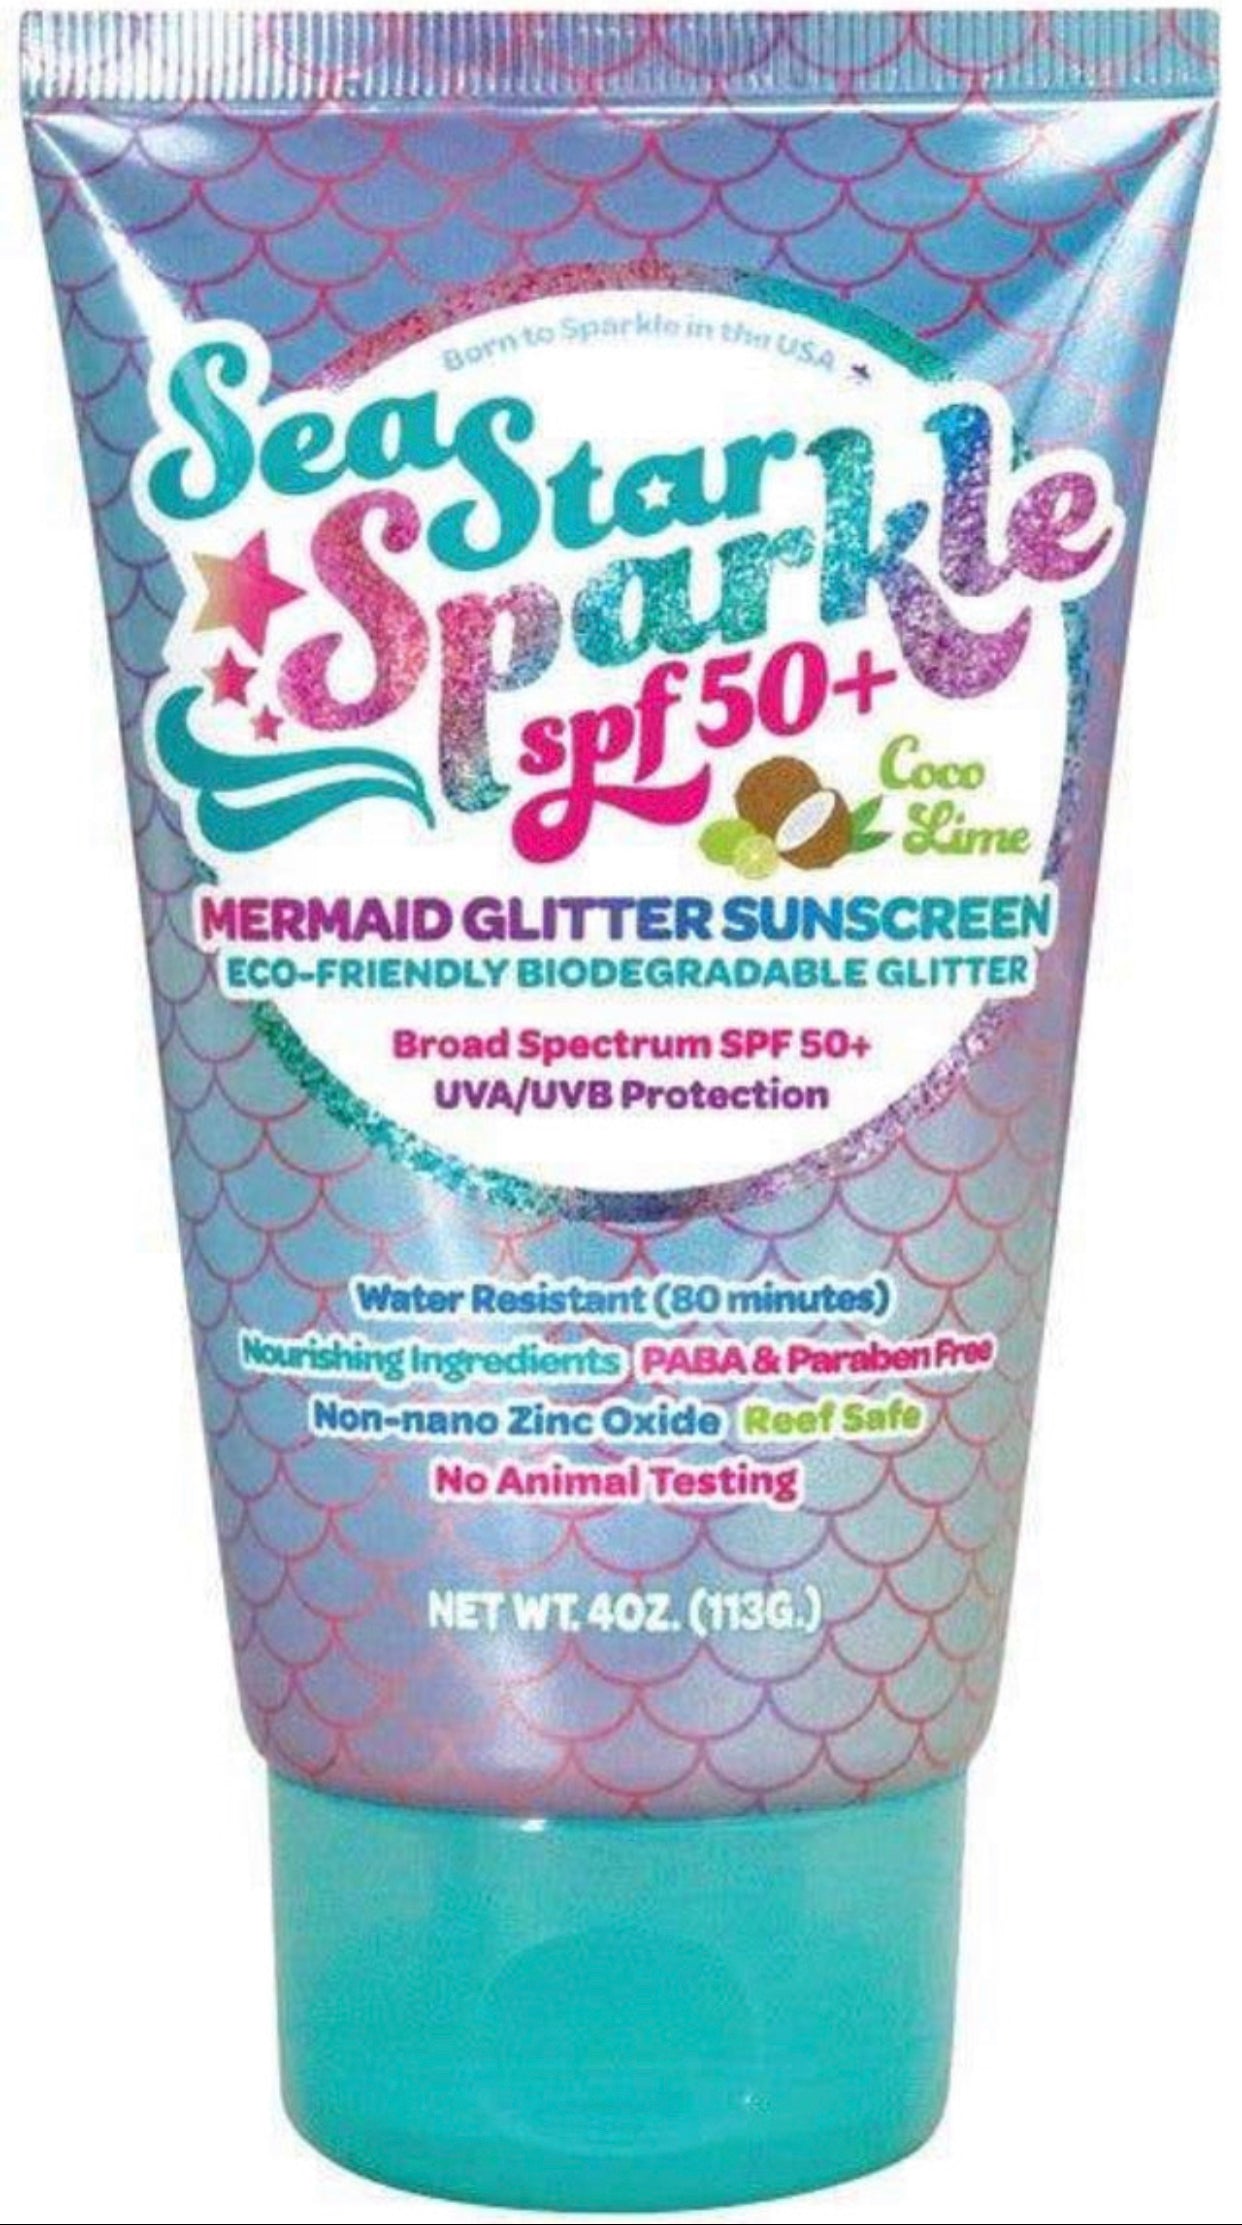 Sea Star Sparkle Sunscreen SPF50 MERMAID